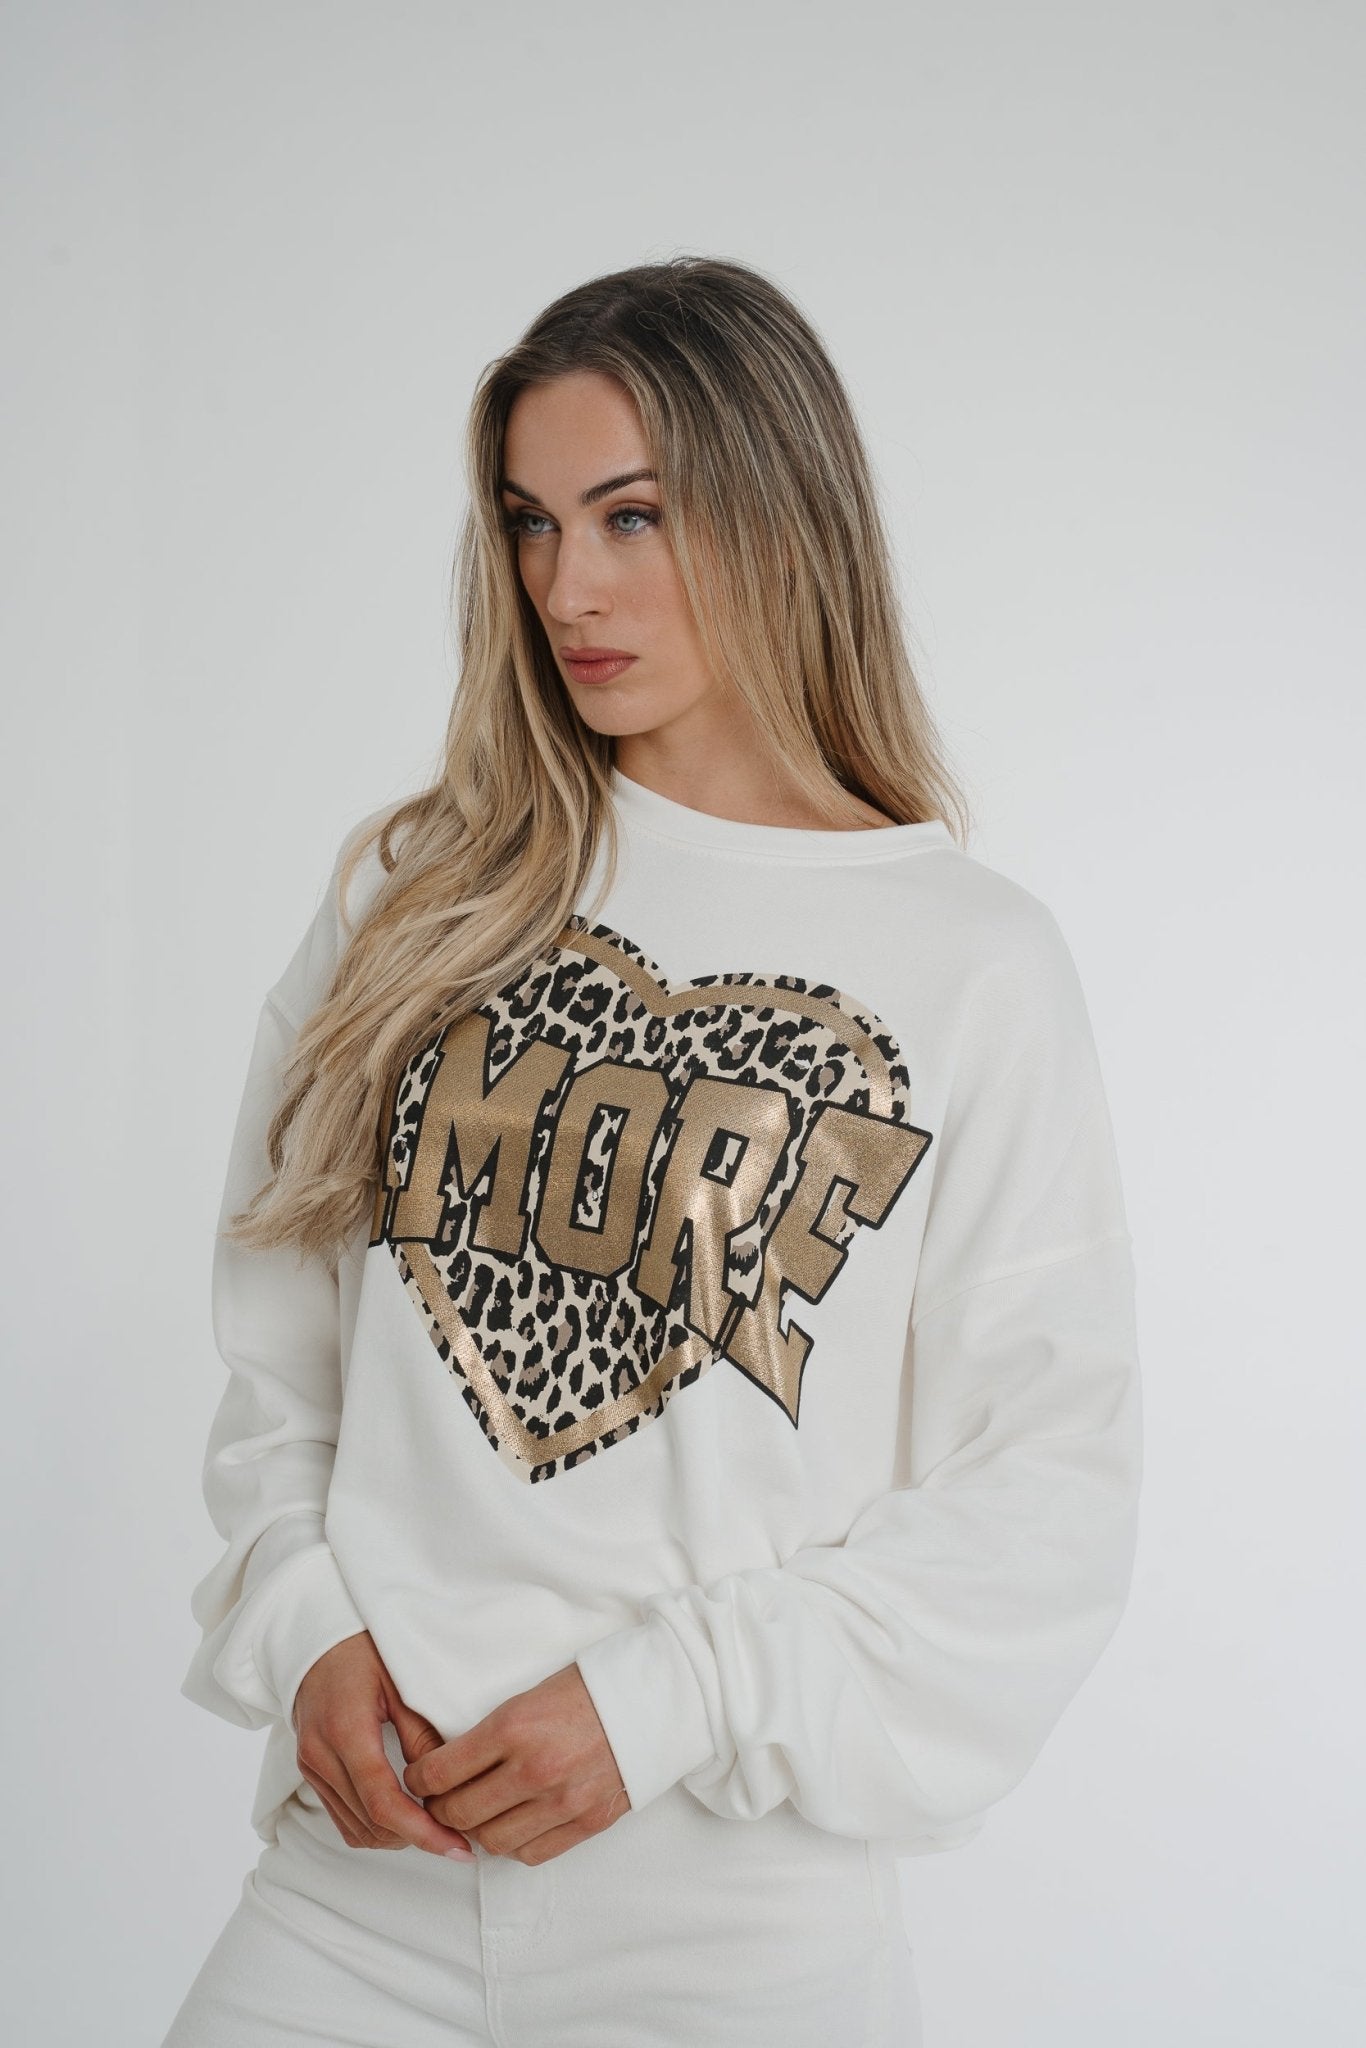 Melanie Leopard Print Sweatshirt In White - The Walk in Wardrobe